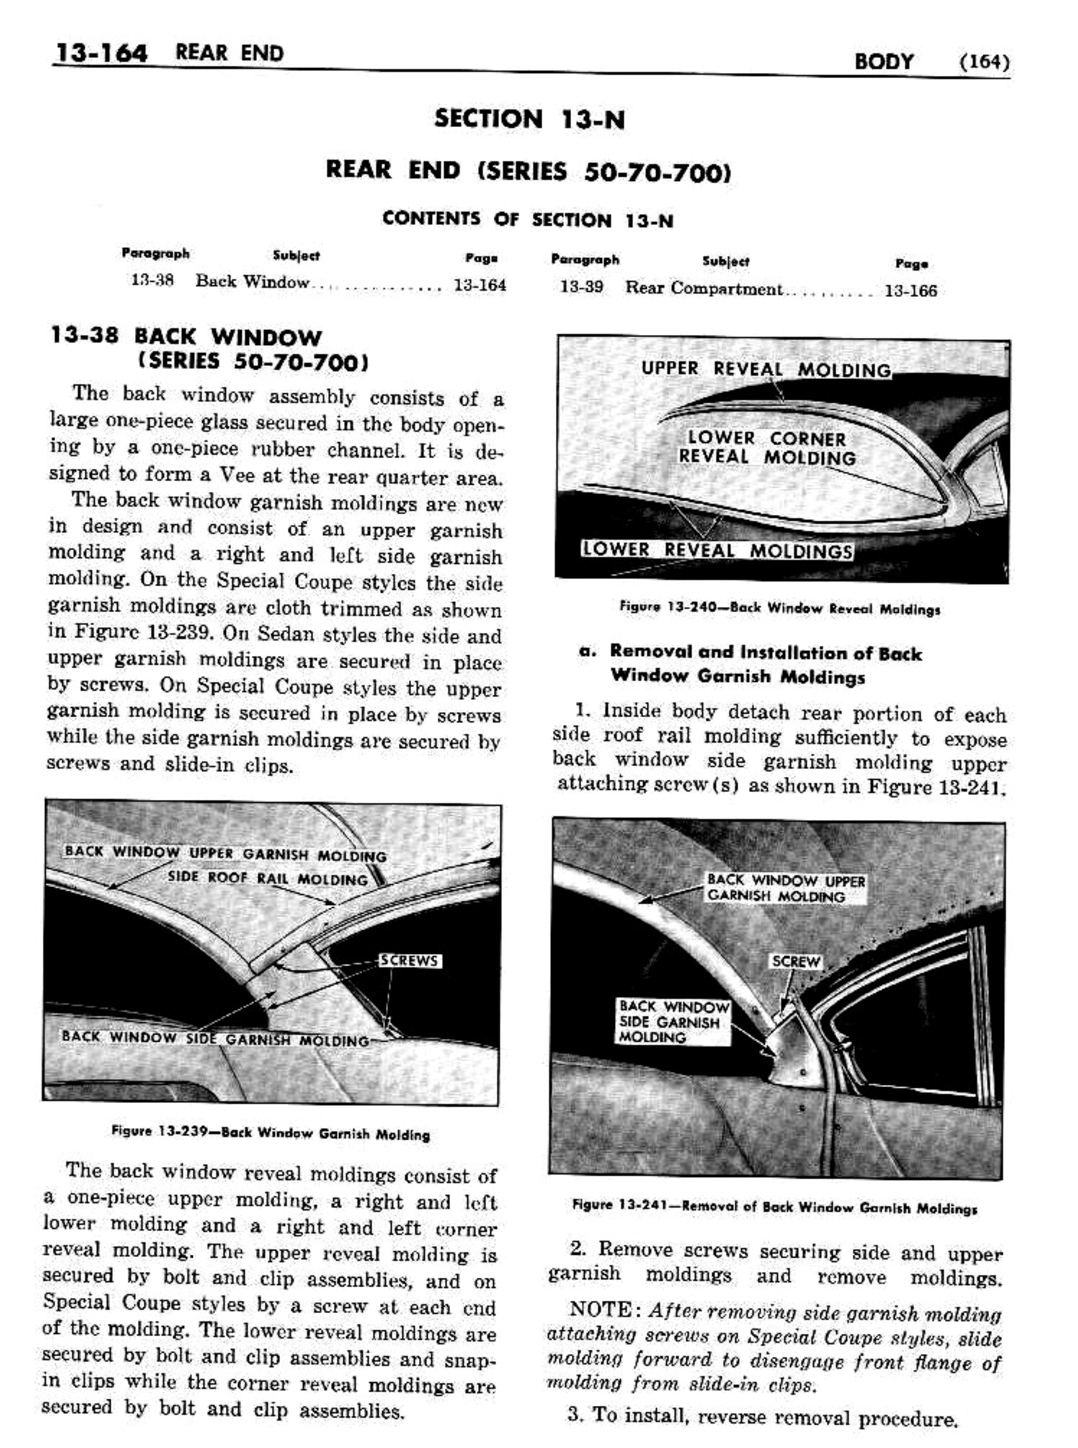 n_1958 Buick Body Service Manual-165-165.jpg